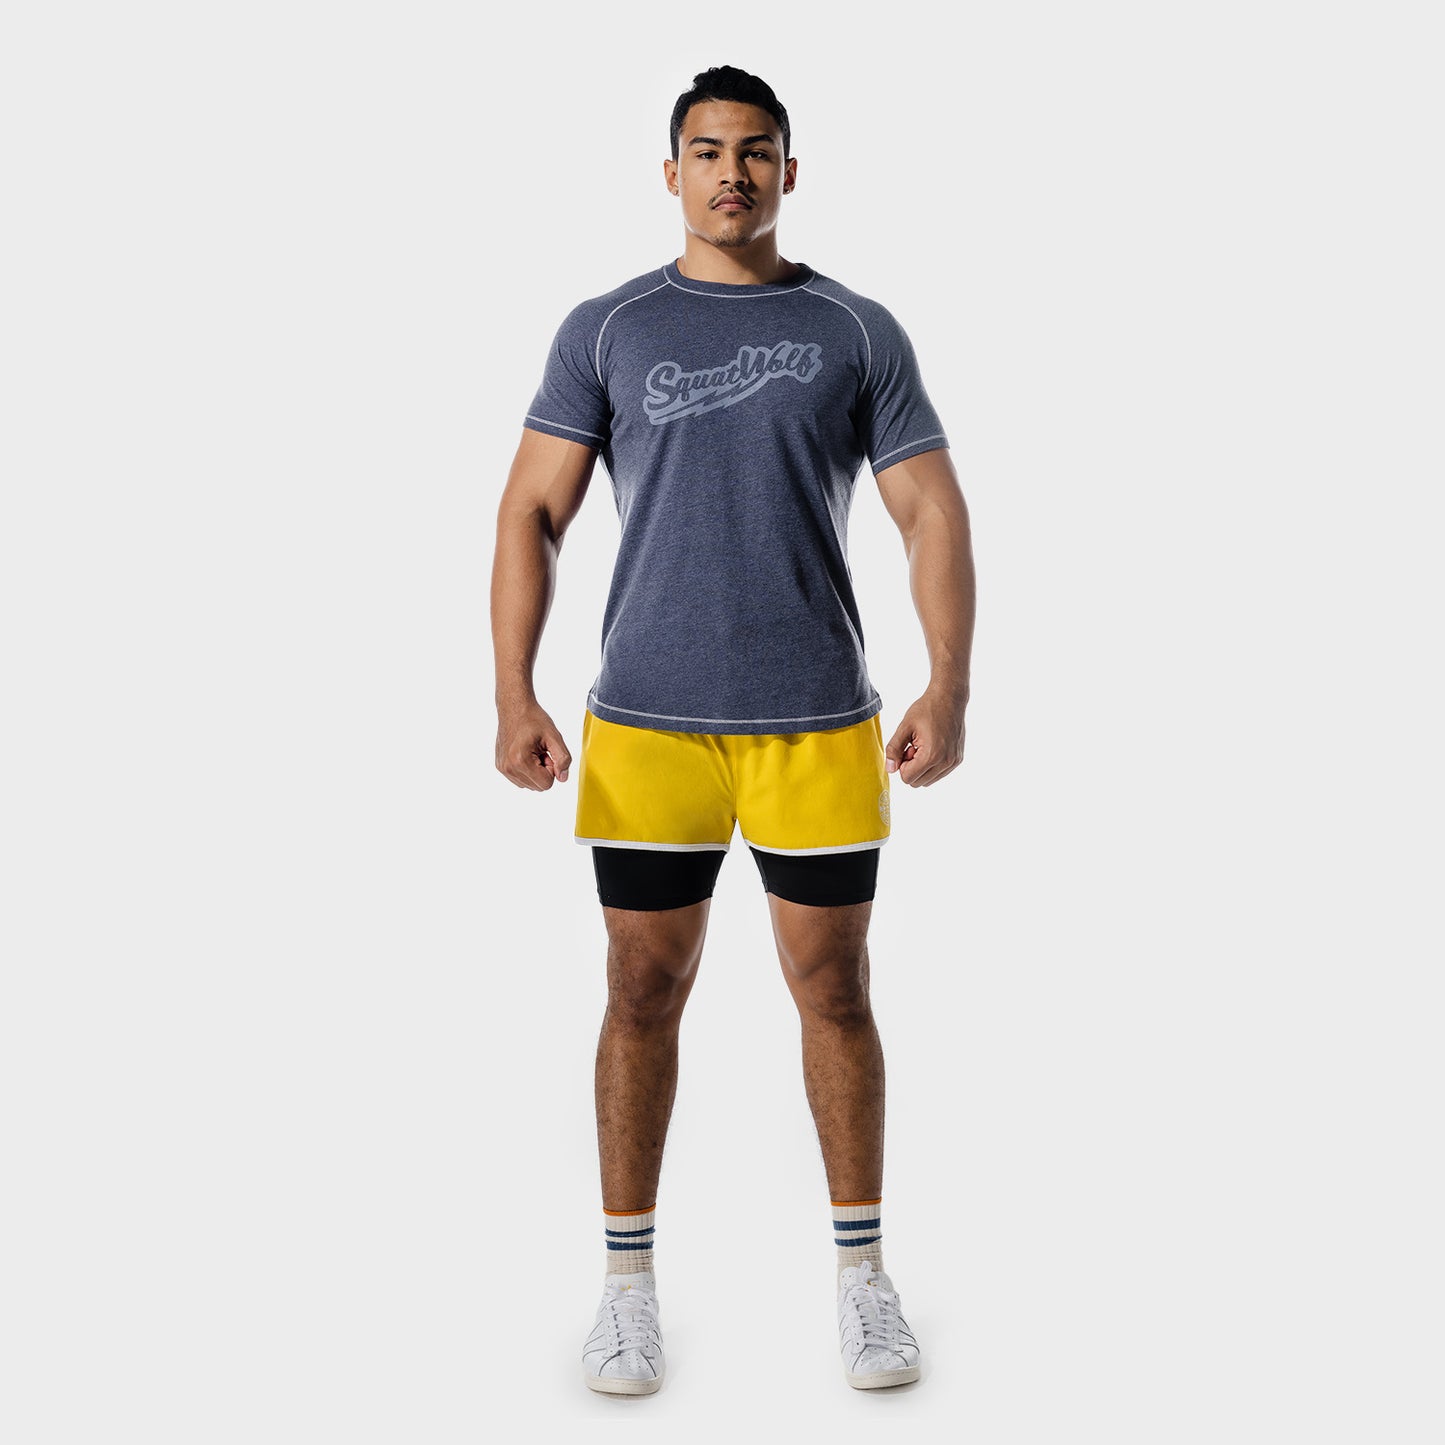 squatwolf-gym-t-shirts-golden-era-one-up-t-shirt-patriot-blue-workout-clothes-for-men